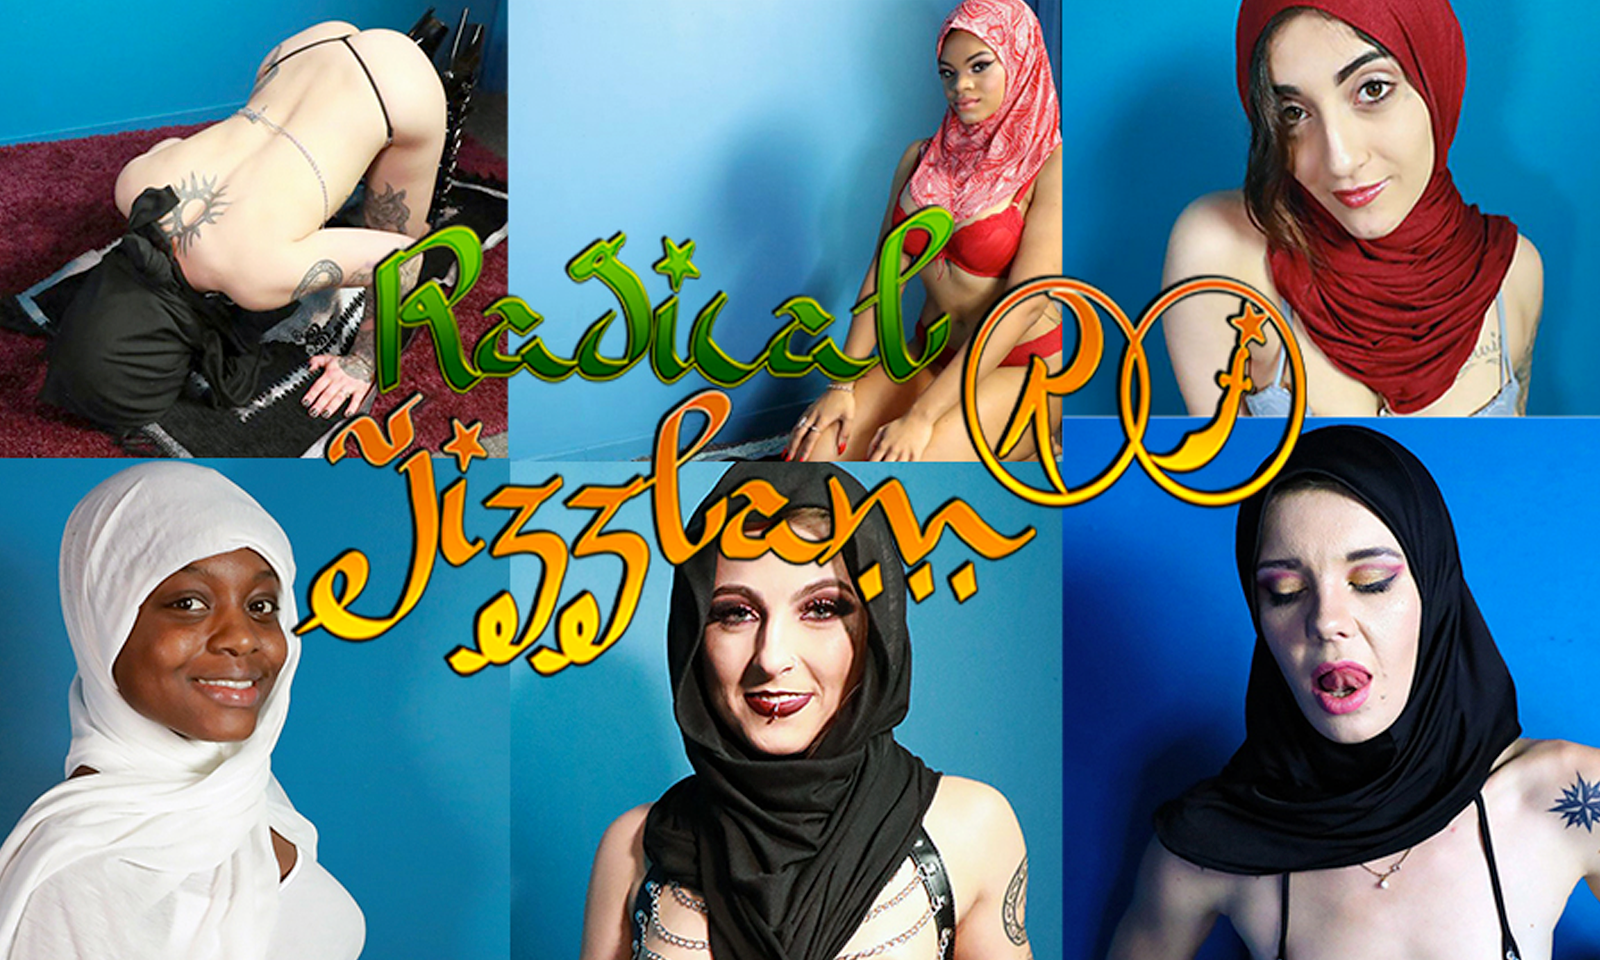 Oral Sex Celebrated Religiously on Radical Jizzlam Website